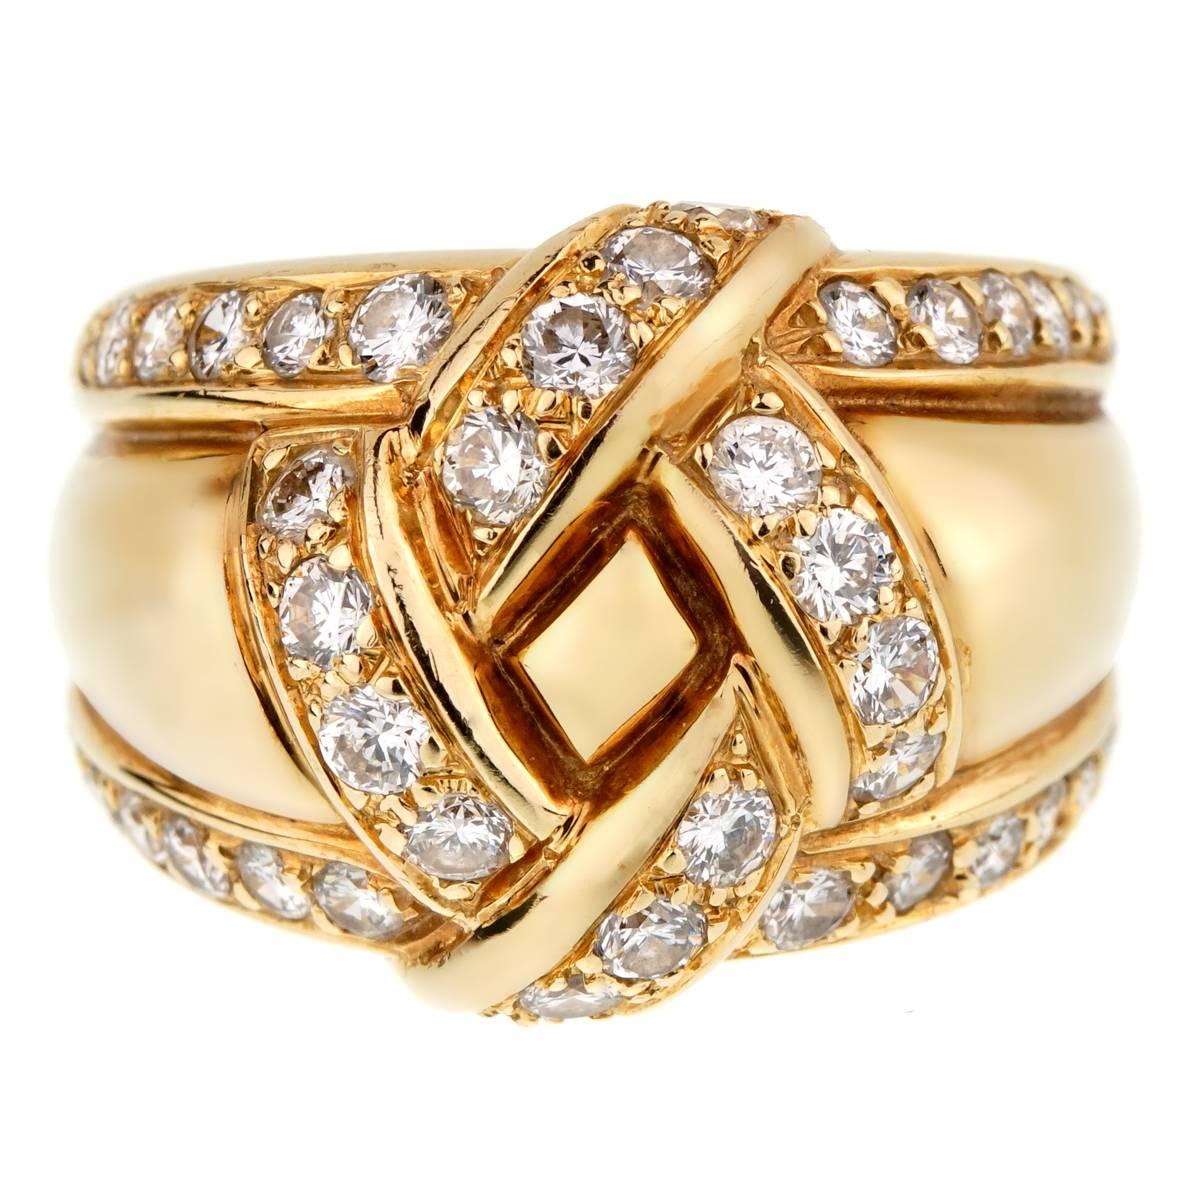 Dior Vintage Diamond Gold Cocktail Ring